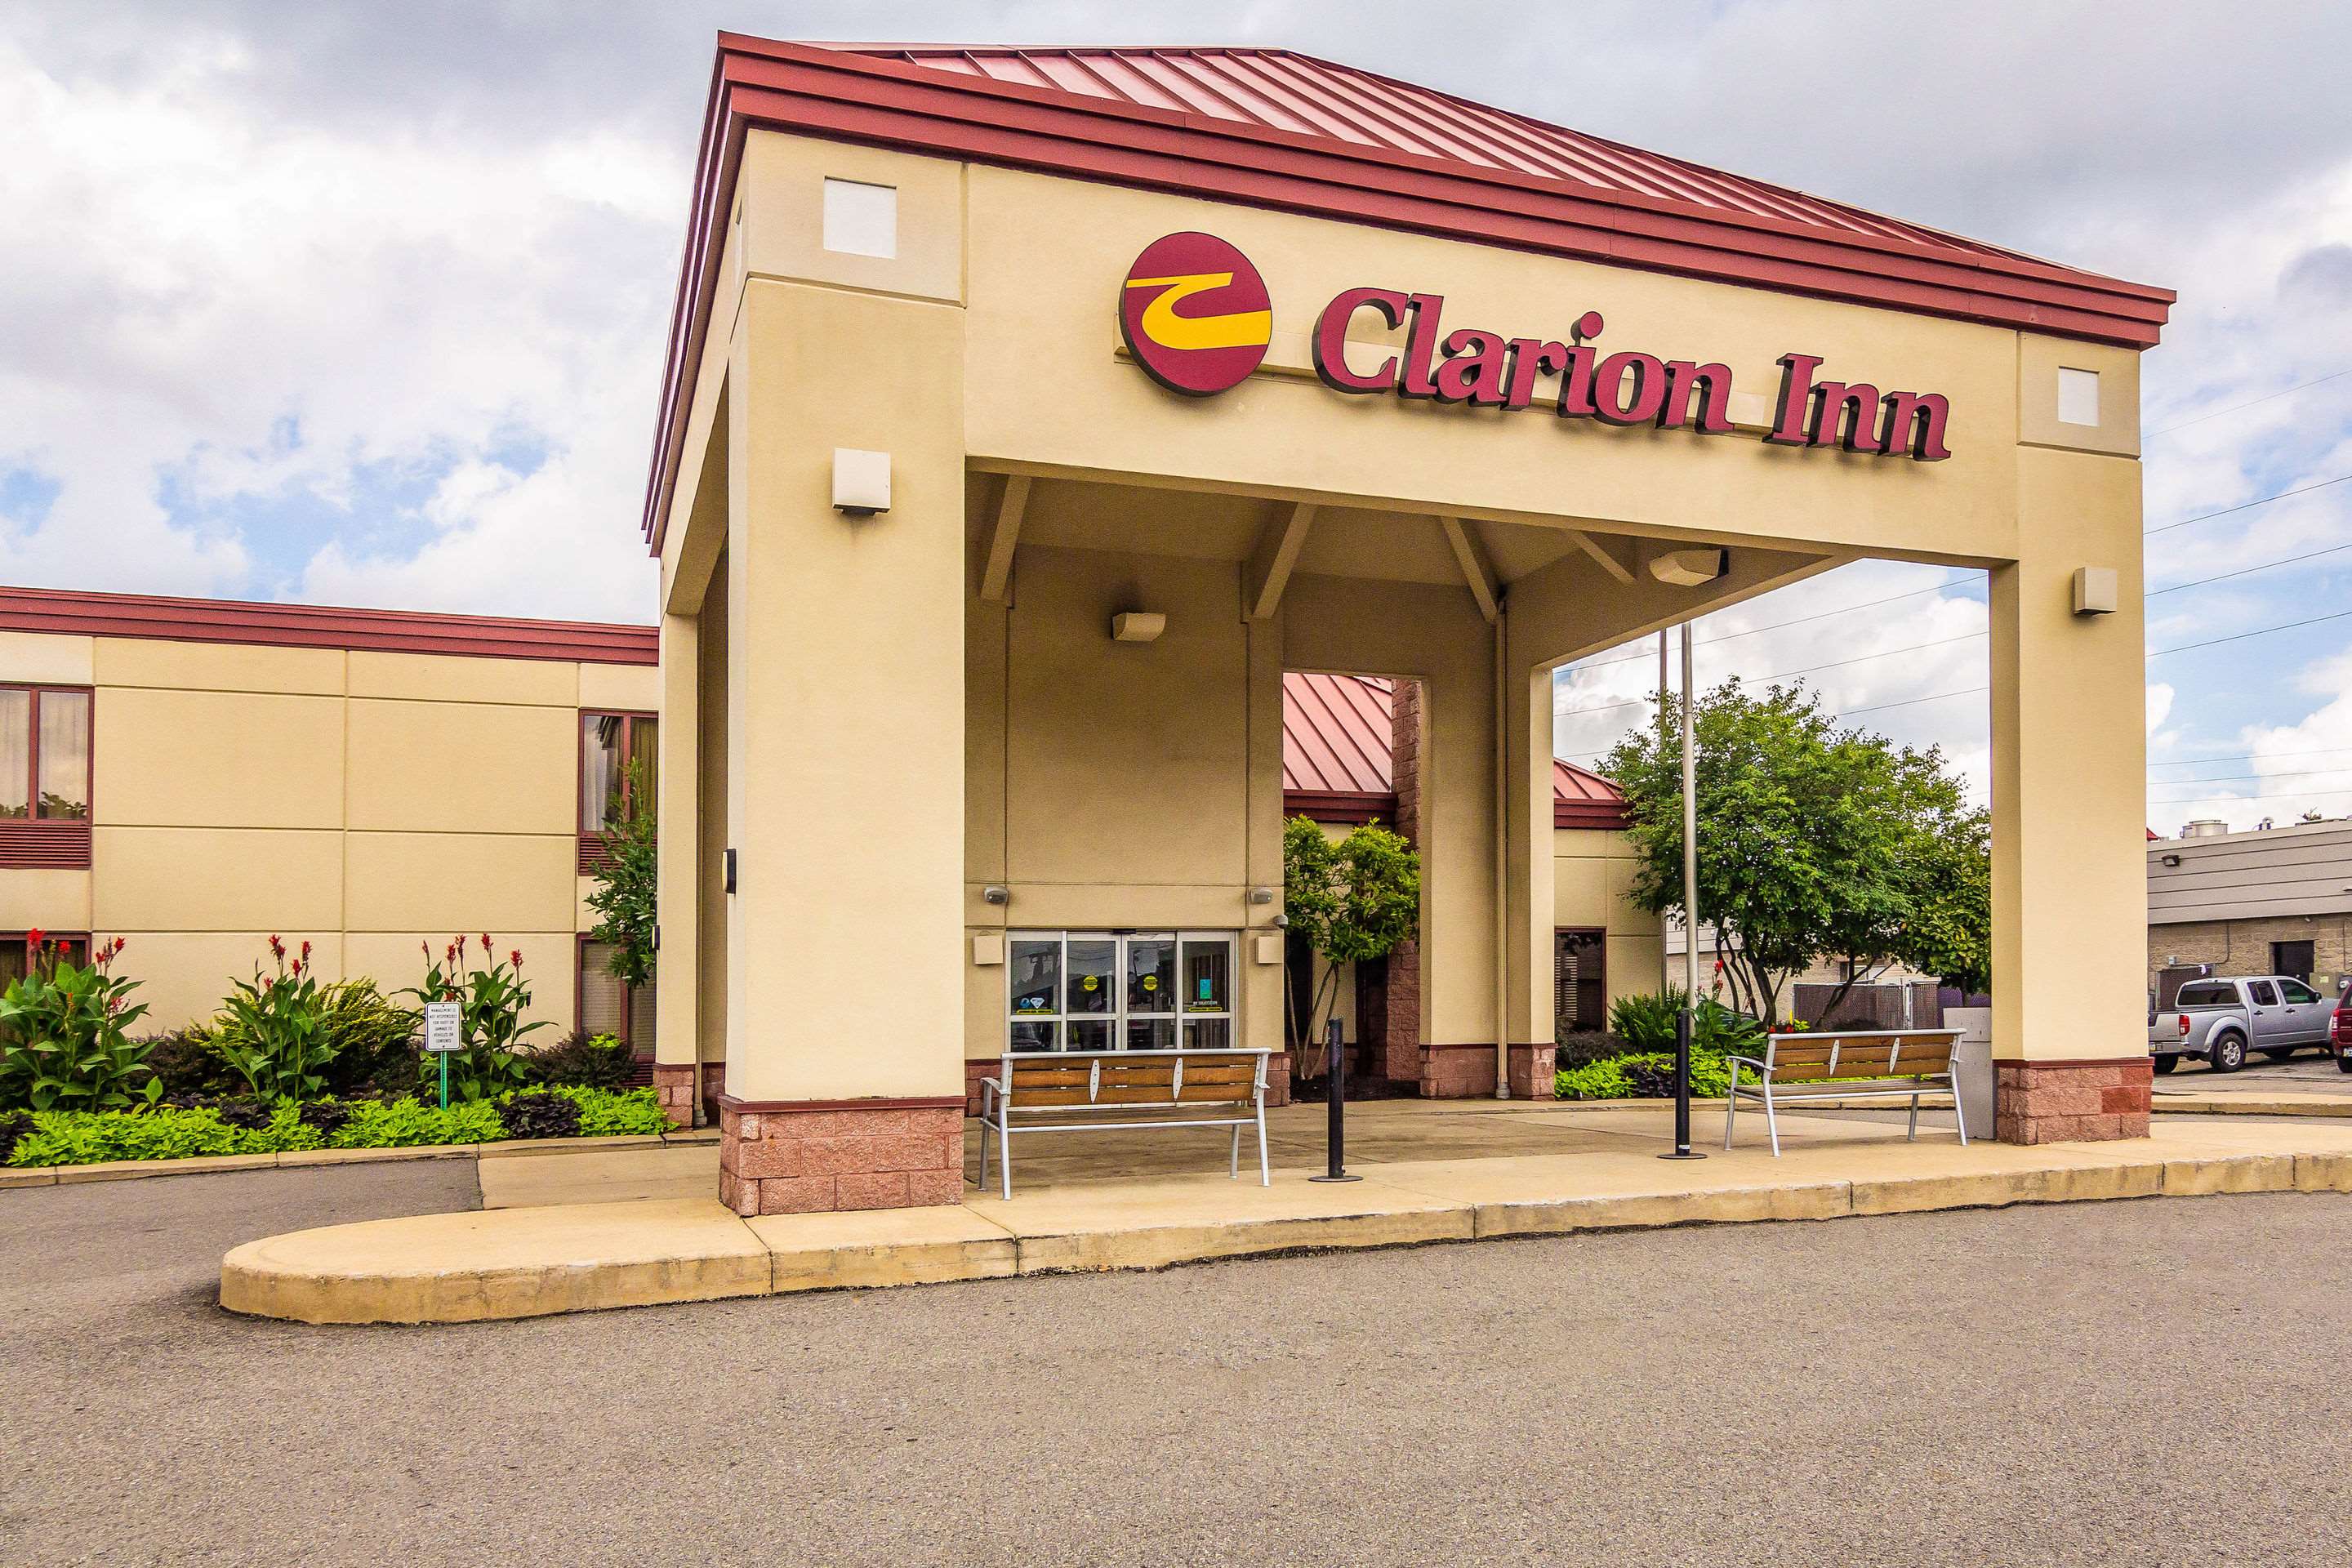 Clarion Inn Photo